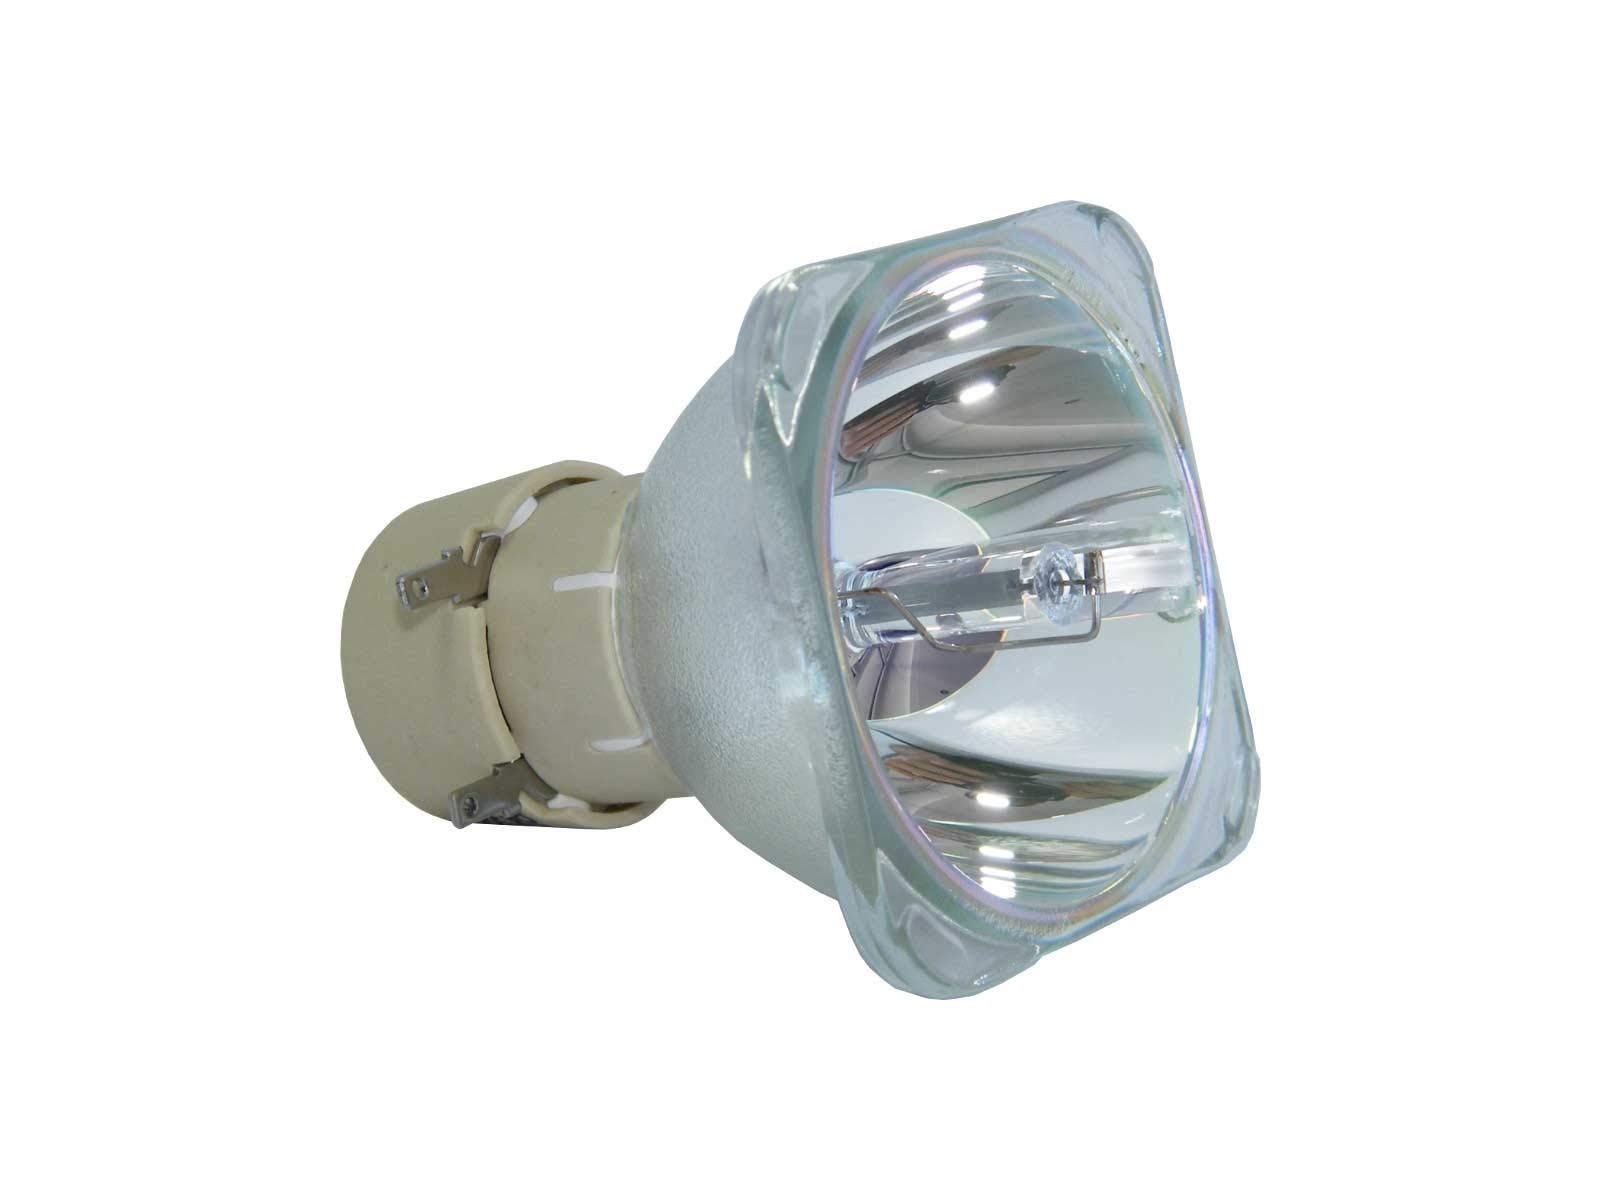 azurano Beamerlampe für ACER MC.JMY11.001 Ersatzlampe Projektorlampe